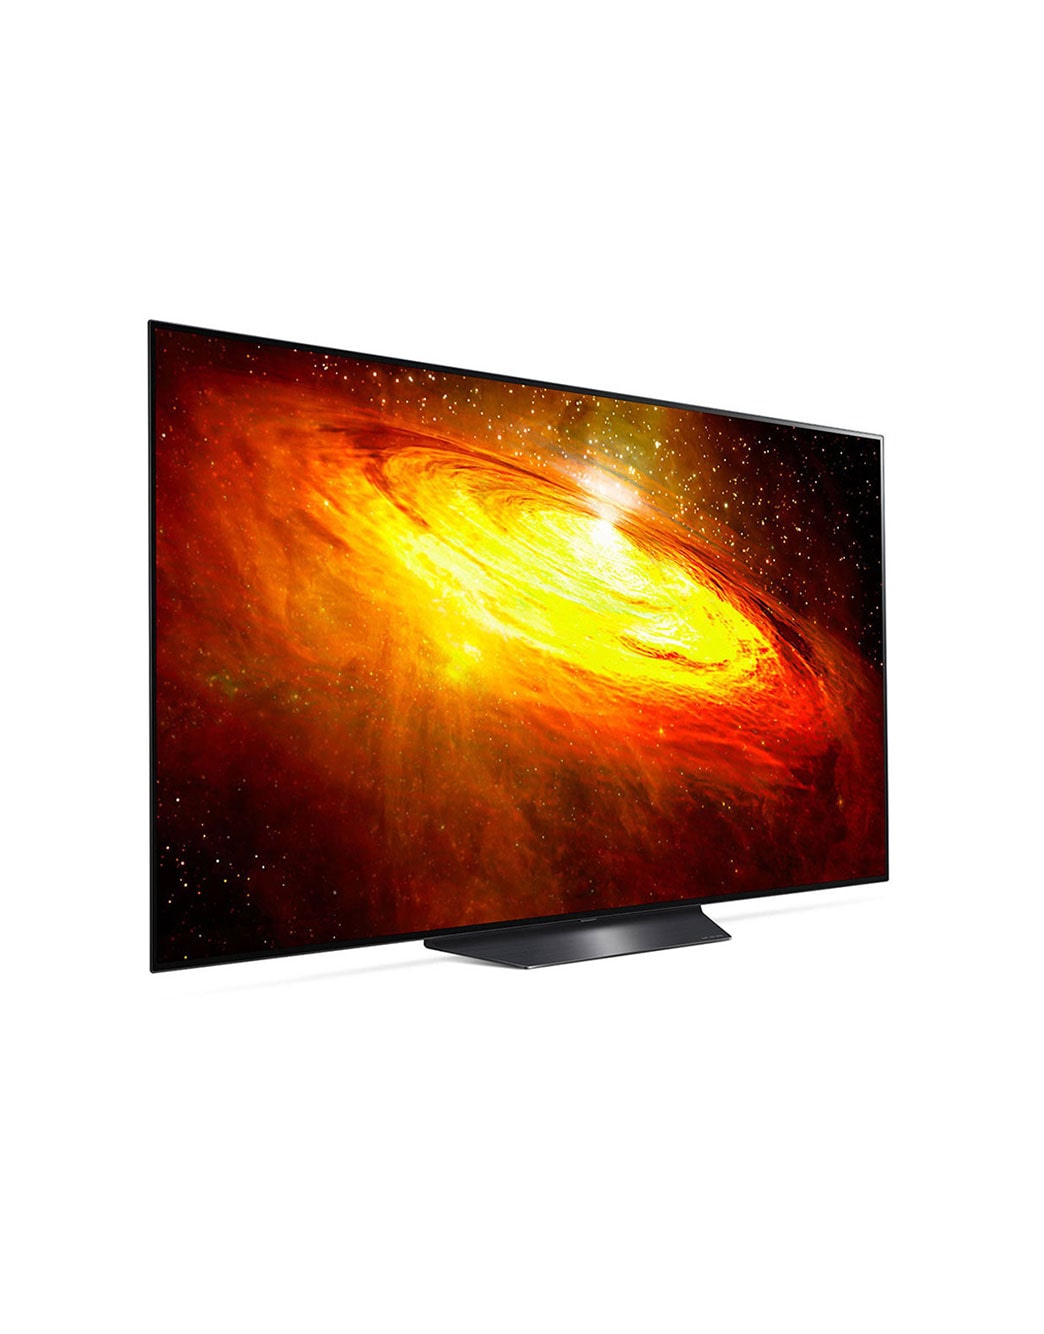 LG OLED TV 55'' 4K, Pixeles con Auto- Iluminación